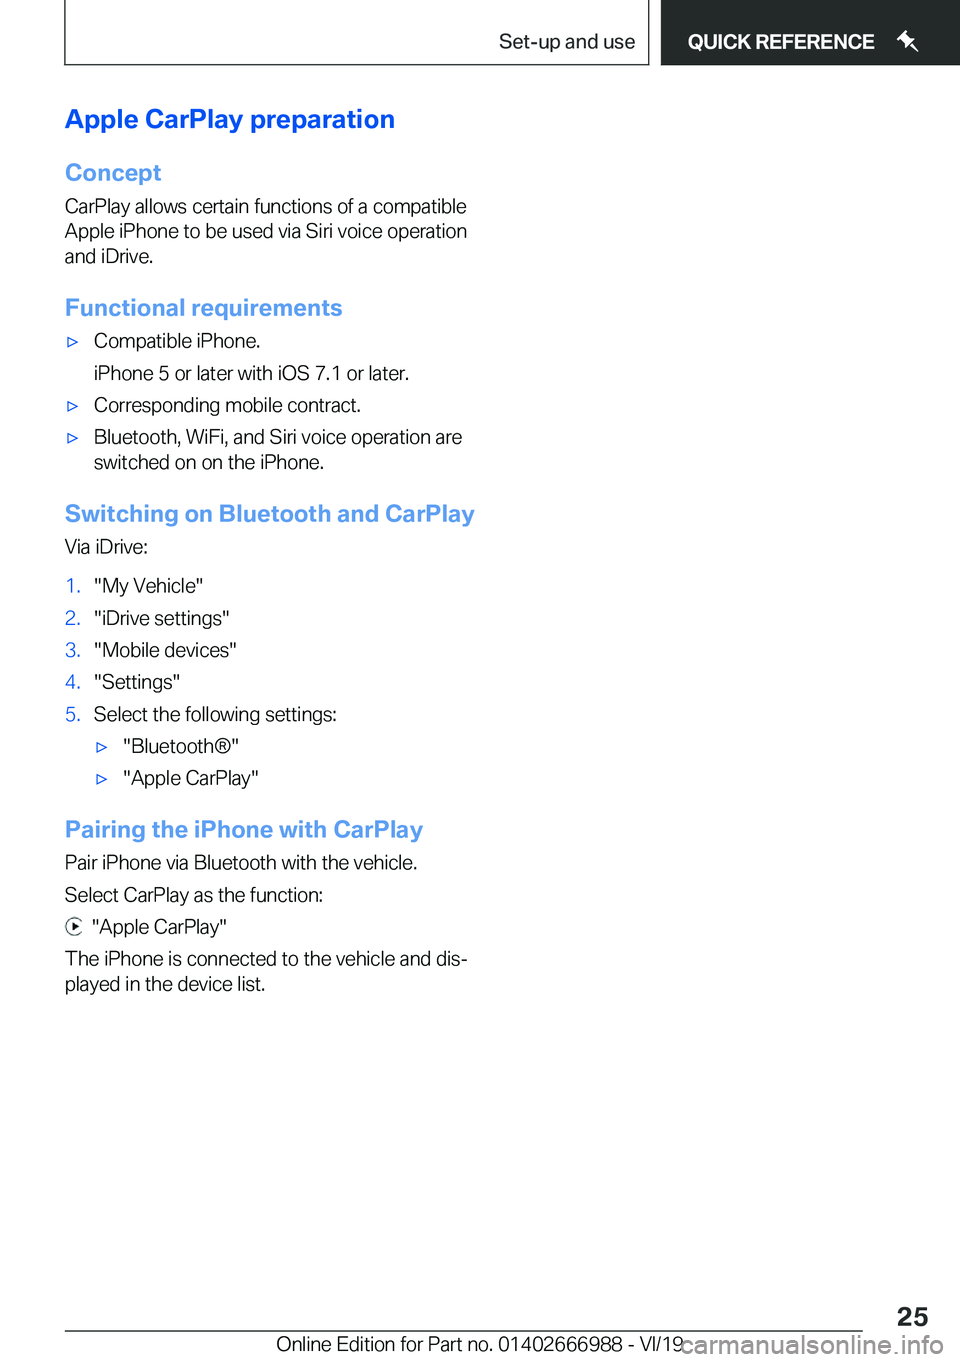 BMW X4 2020 Owners Manual �A�p�p�l�e��C�a�r�P�l�a�y��p�r�e�p�a�r�a�t�i�o�n�C�o�n�c�e�p�t
�C�a�r�P�l�a�y��a�l�l�o�w�s��c�e�r�t�a�i�n��f�u�n�c�t�i�o�n�s��o�f��a��c�o�m�p�a�t�i�b�l�e
�A�p�p�l�e��i�P�h�o�n�e��t�o��b�e�